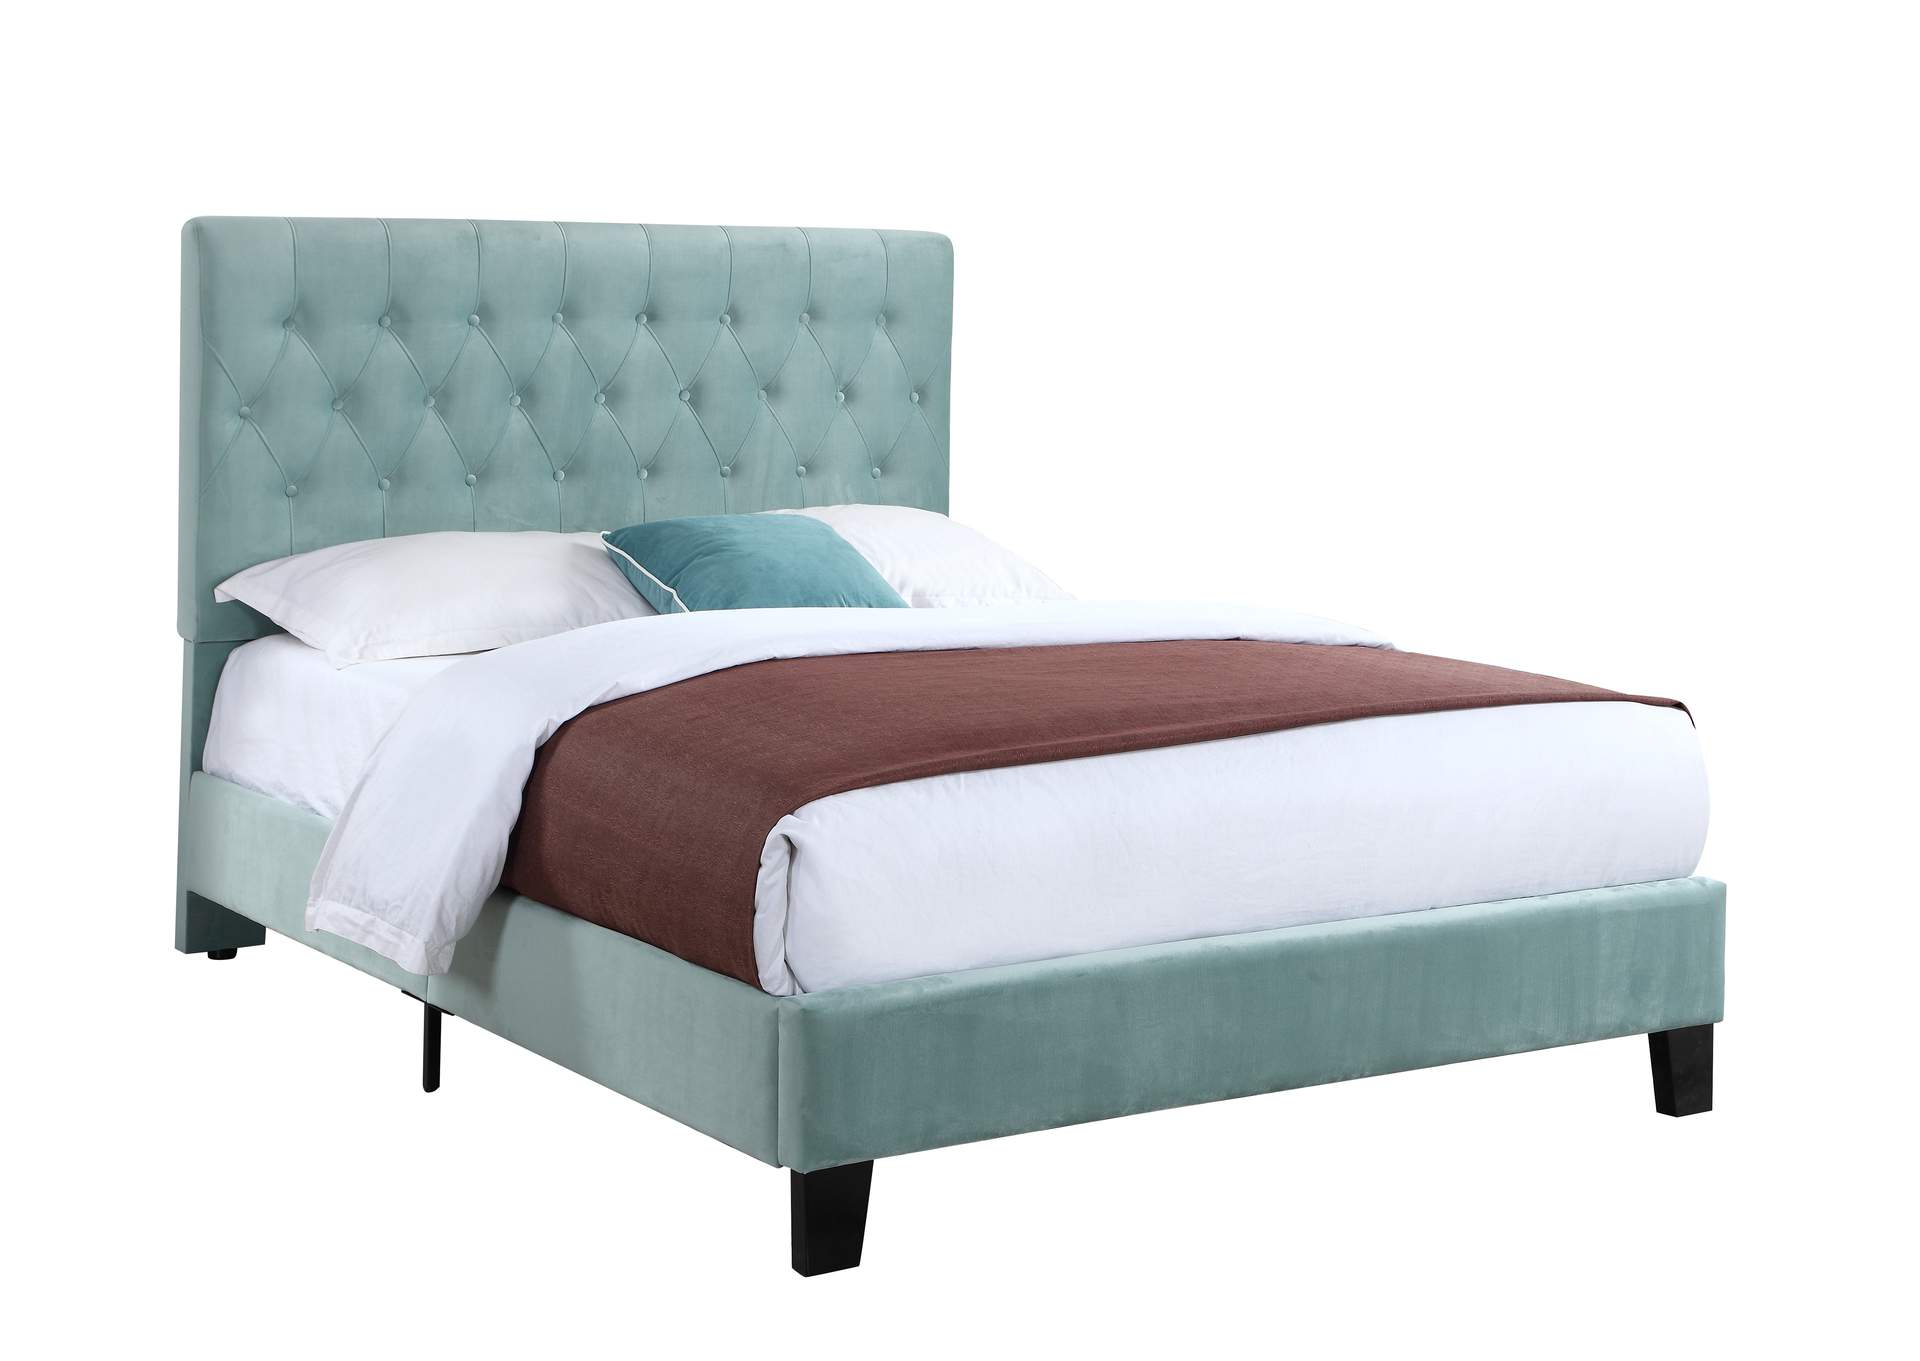 Amelia Light Blue King Upholstered Bed,Emerald Home Furnishings